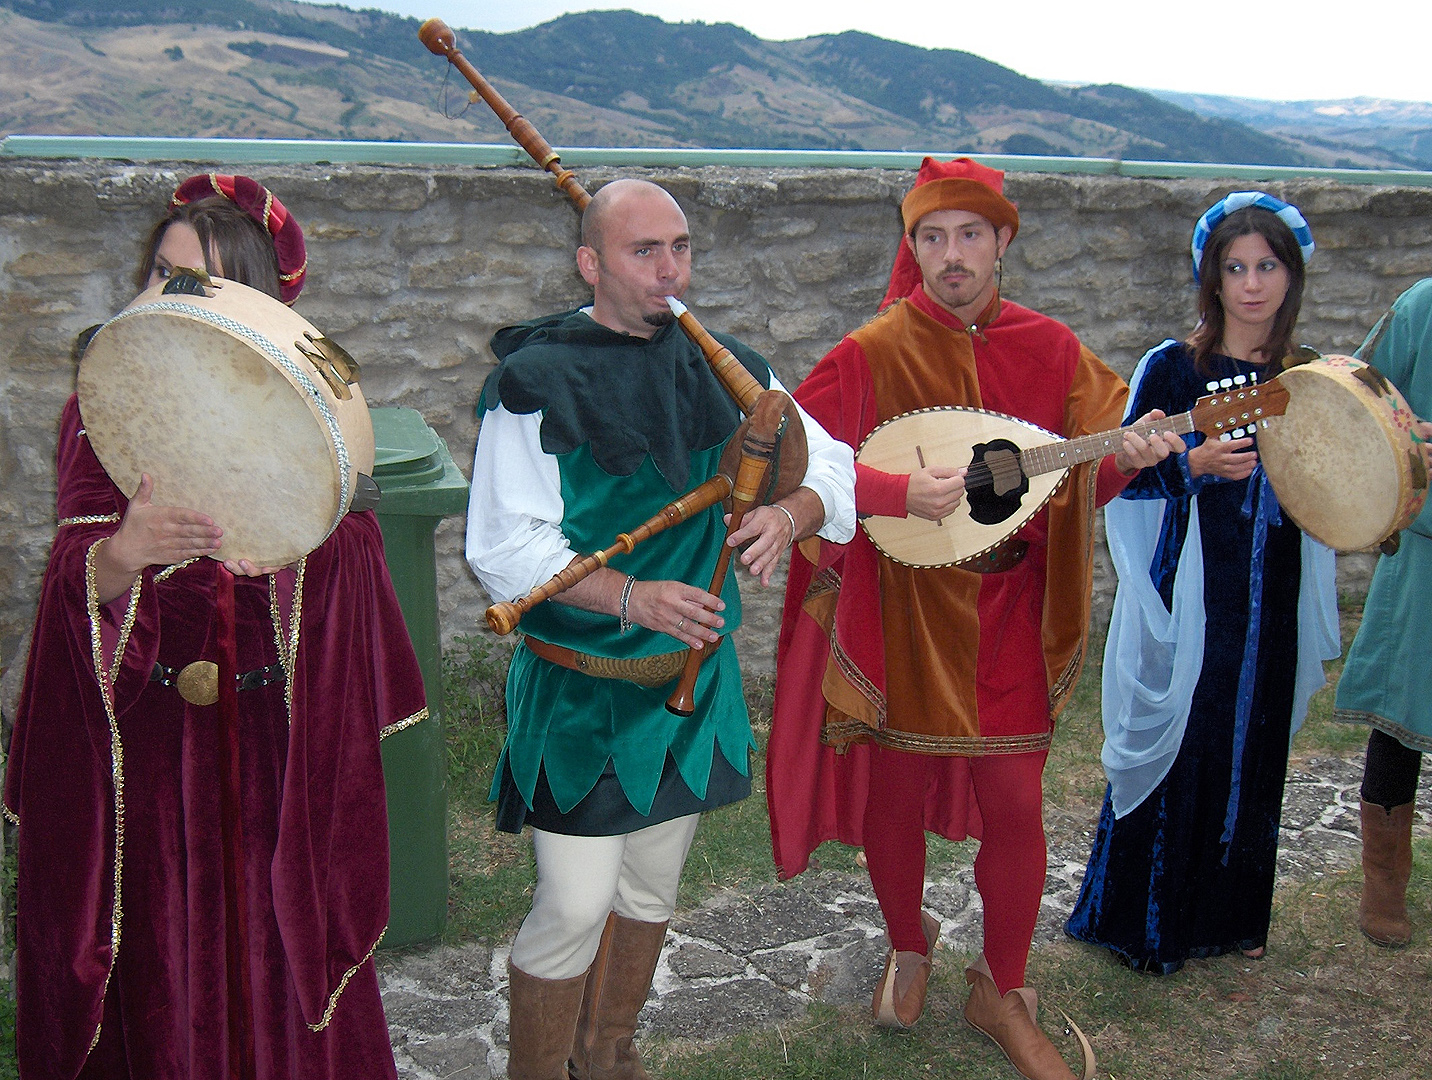 Historisch gezelschap (Abruzzen, Itali), Historical group (Abruzzo, Italy)